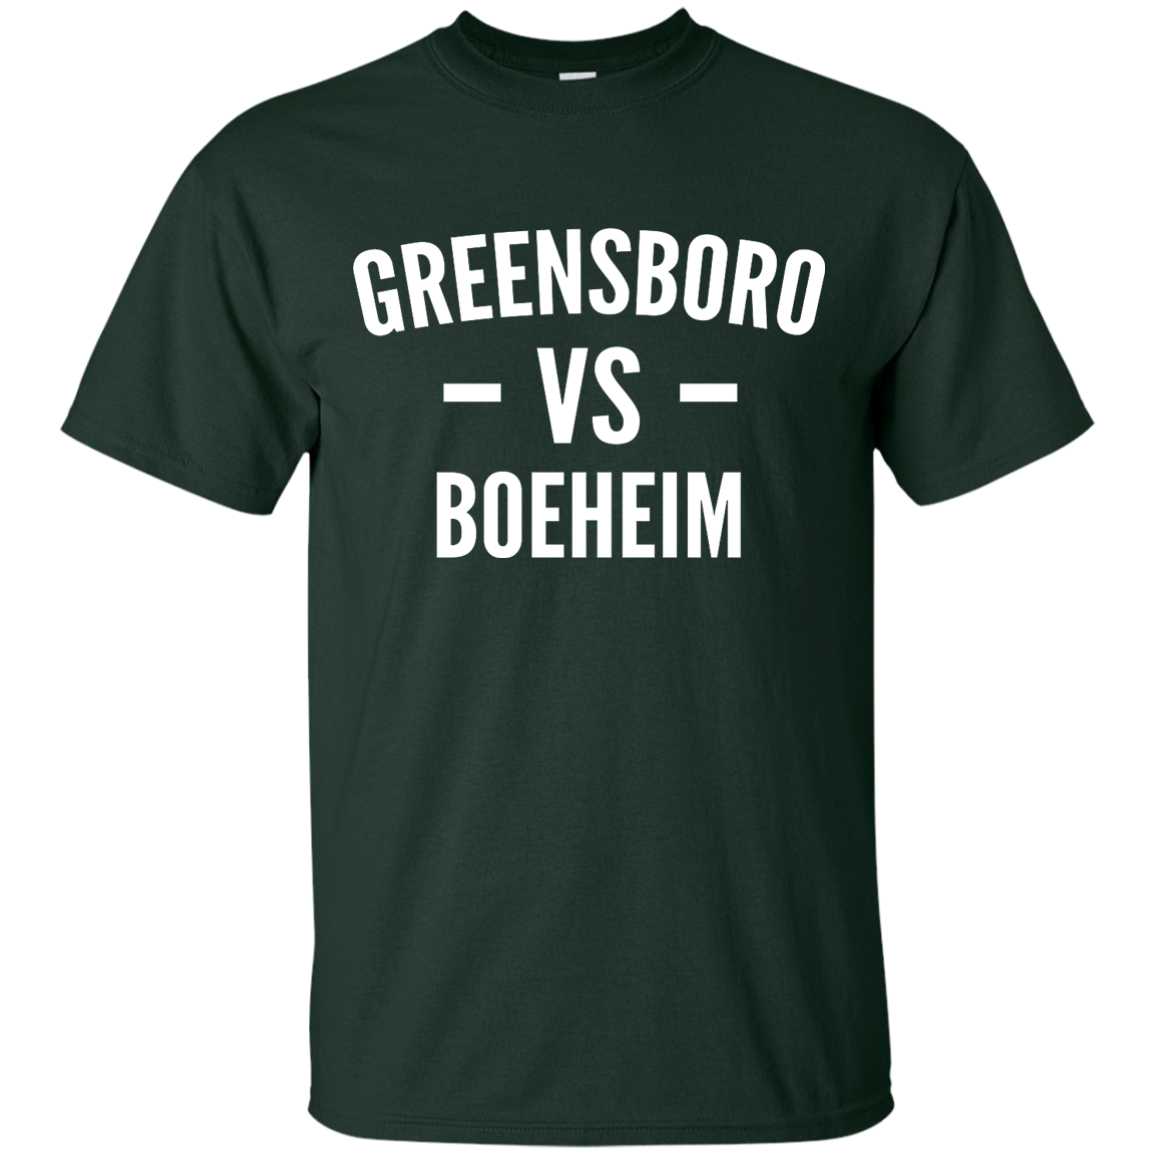 Greensboro vs Boeheim shirt, sweater, tank